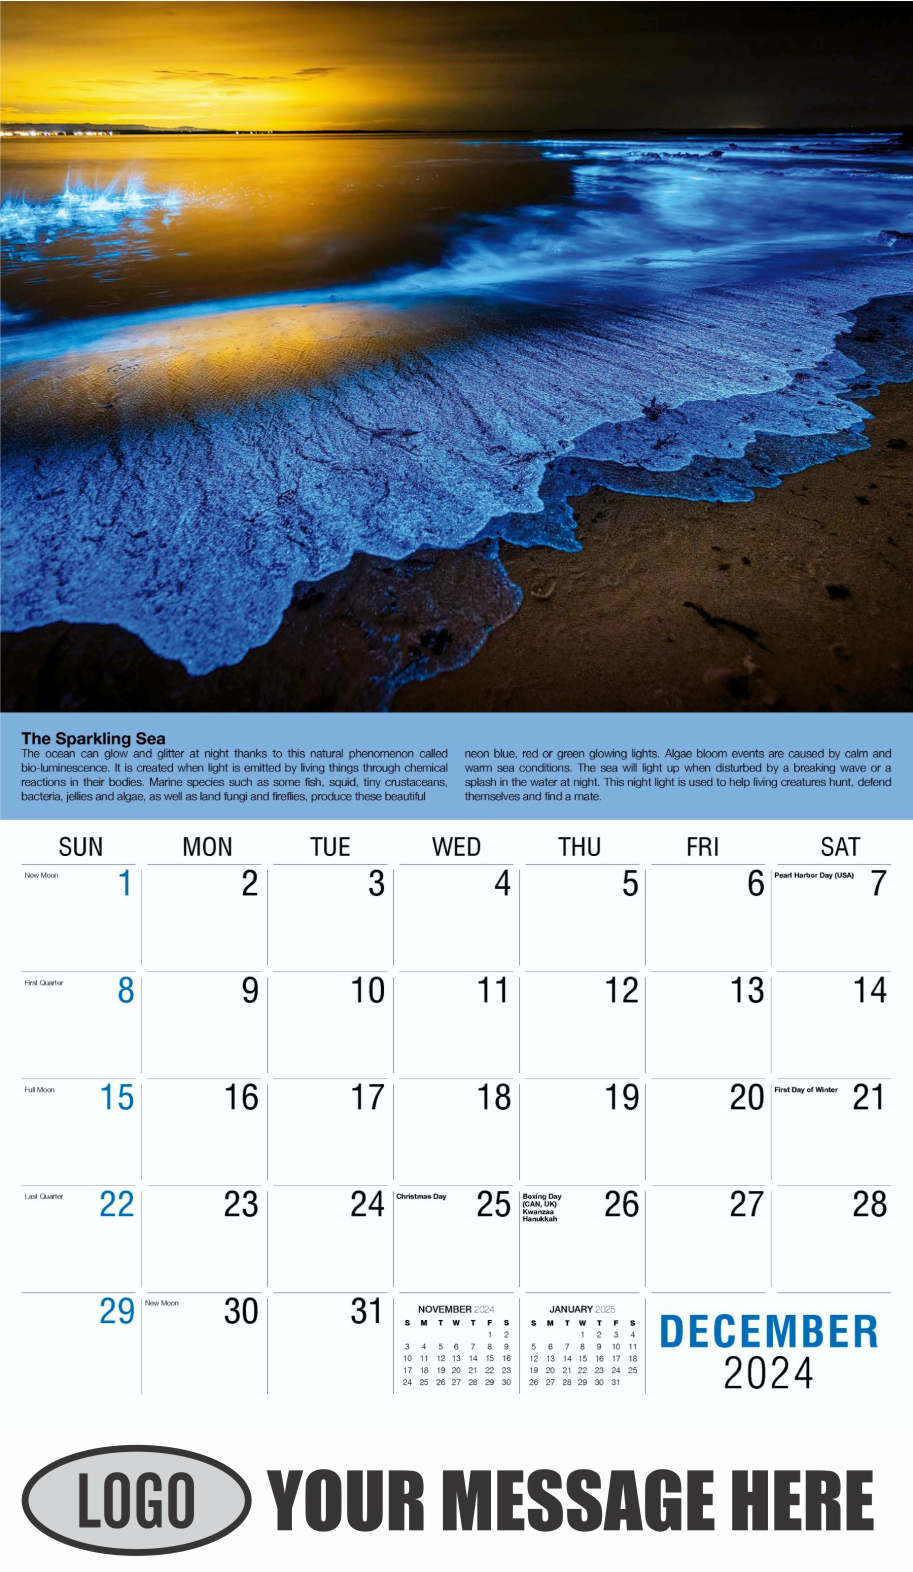 Planet Earth 2024 Business Promotional Wall Calendar - December